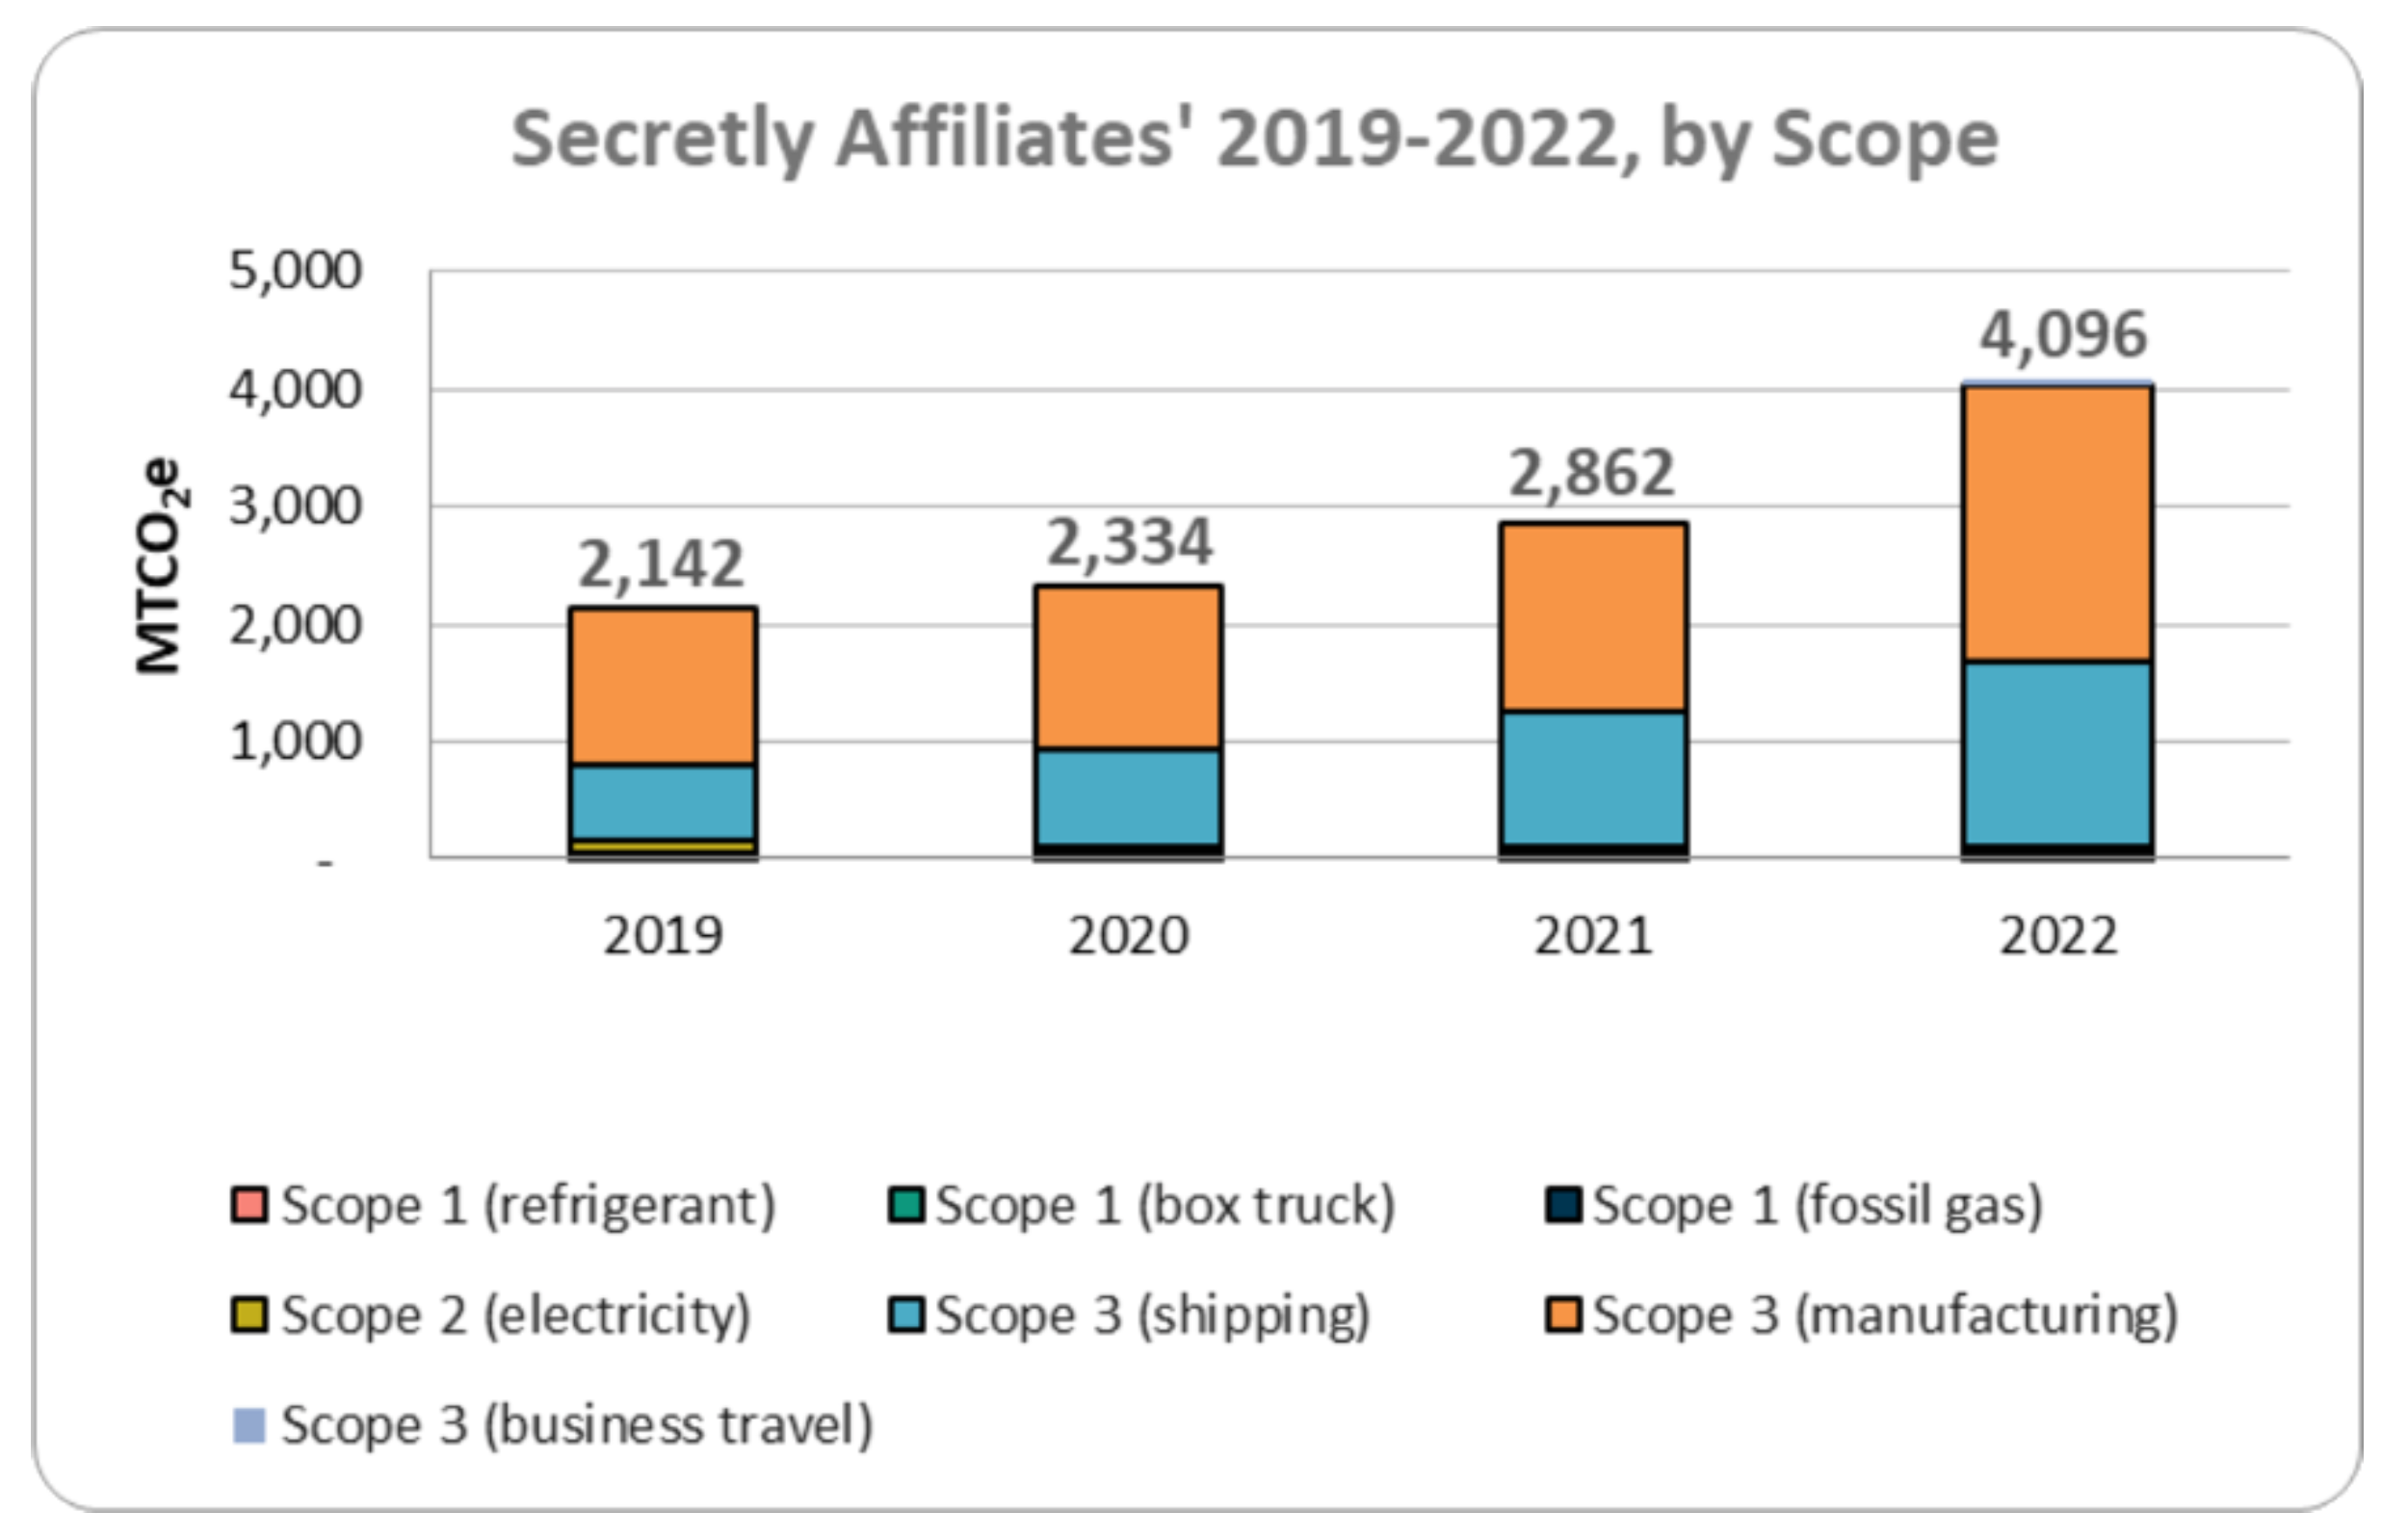 Secretly Affiliates' 2019-2022 by Scope